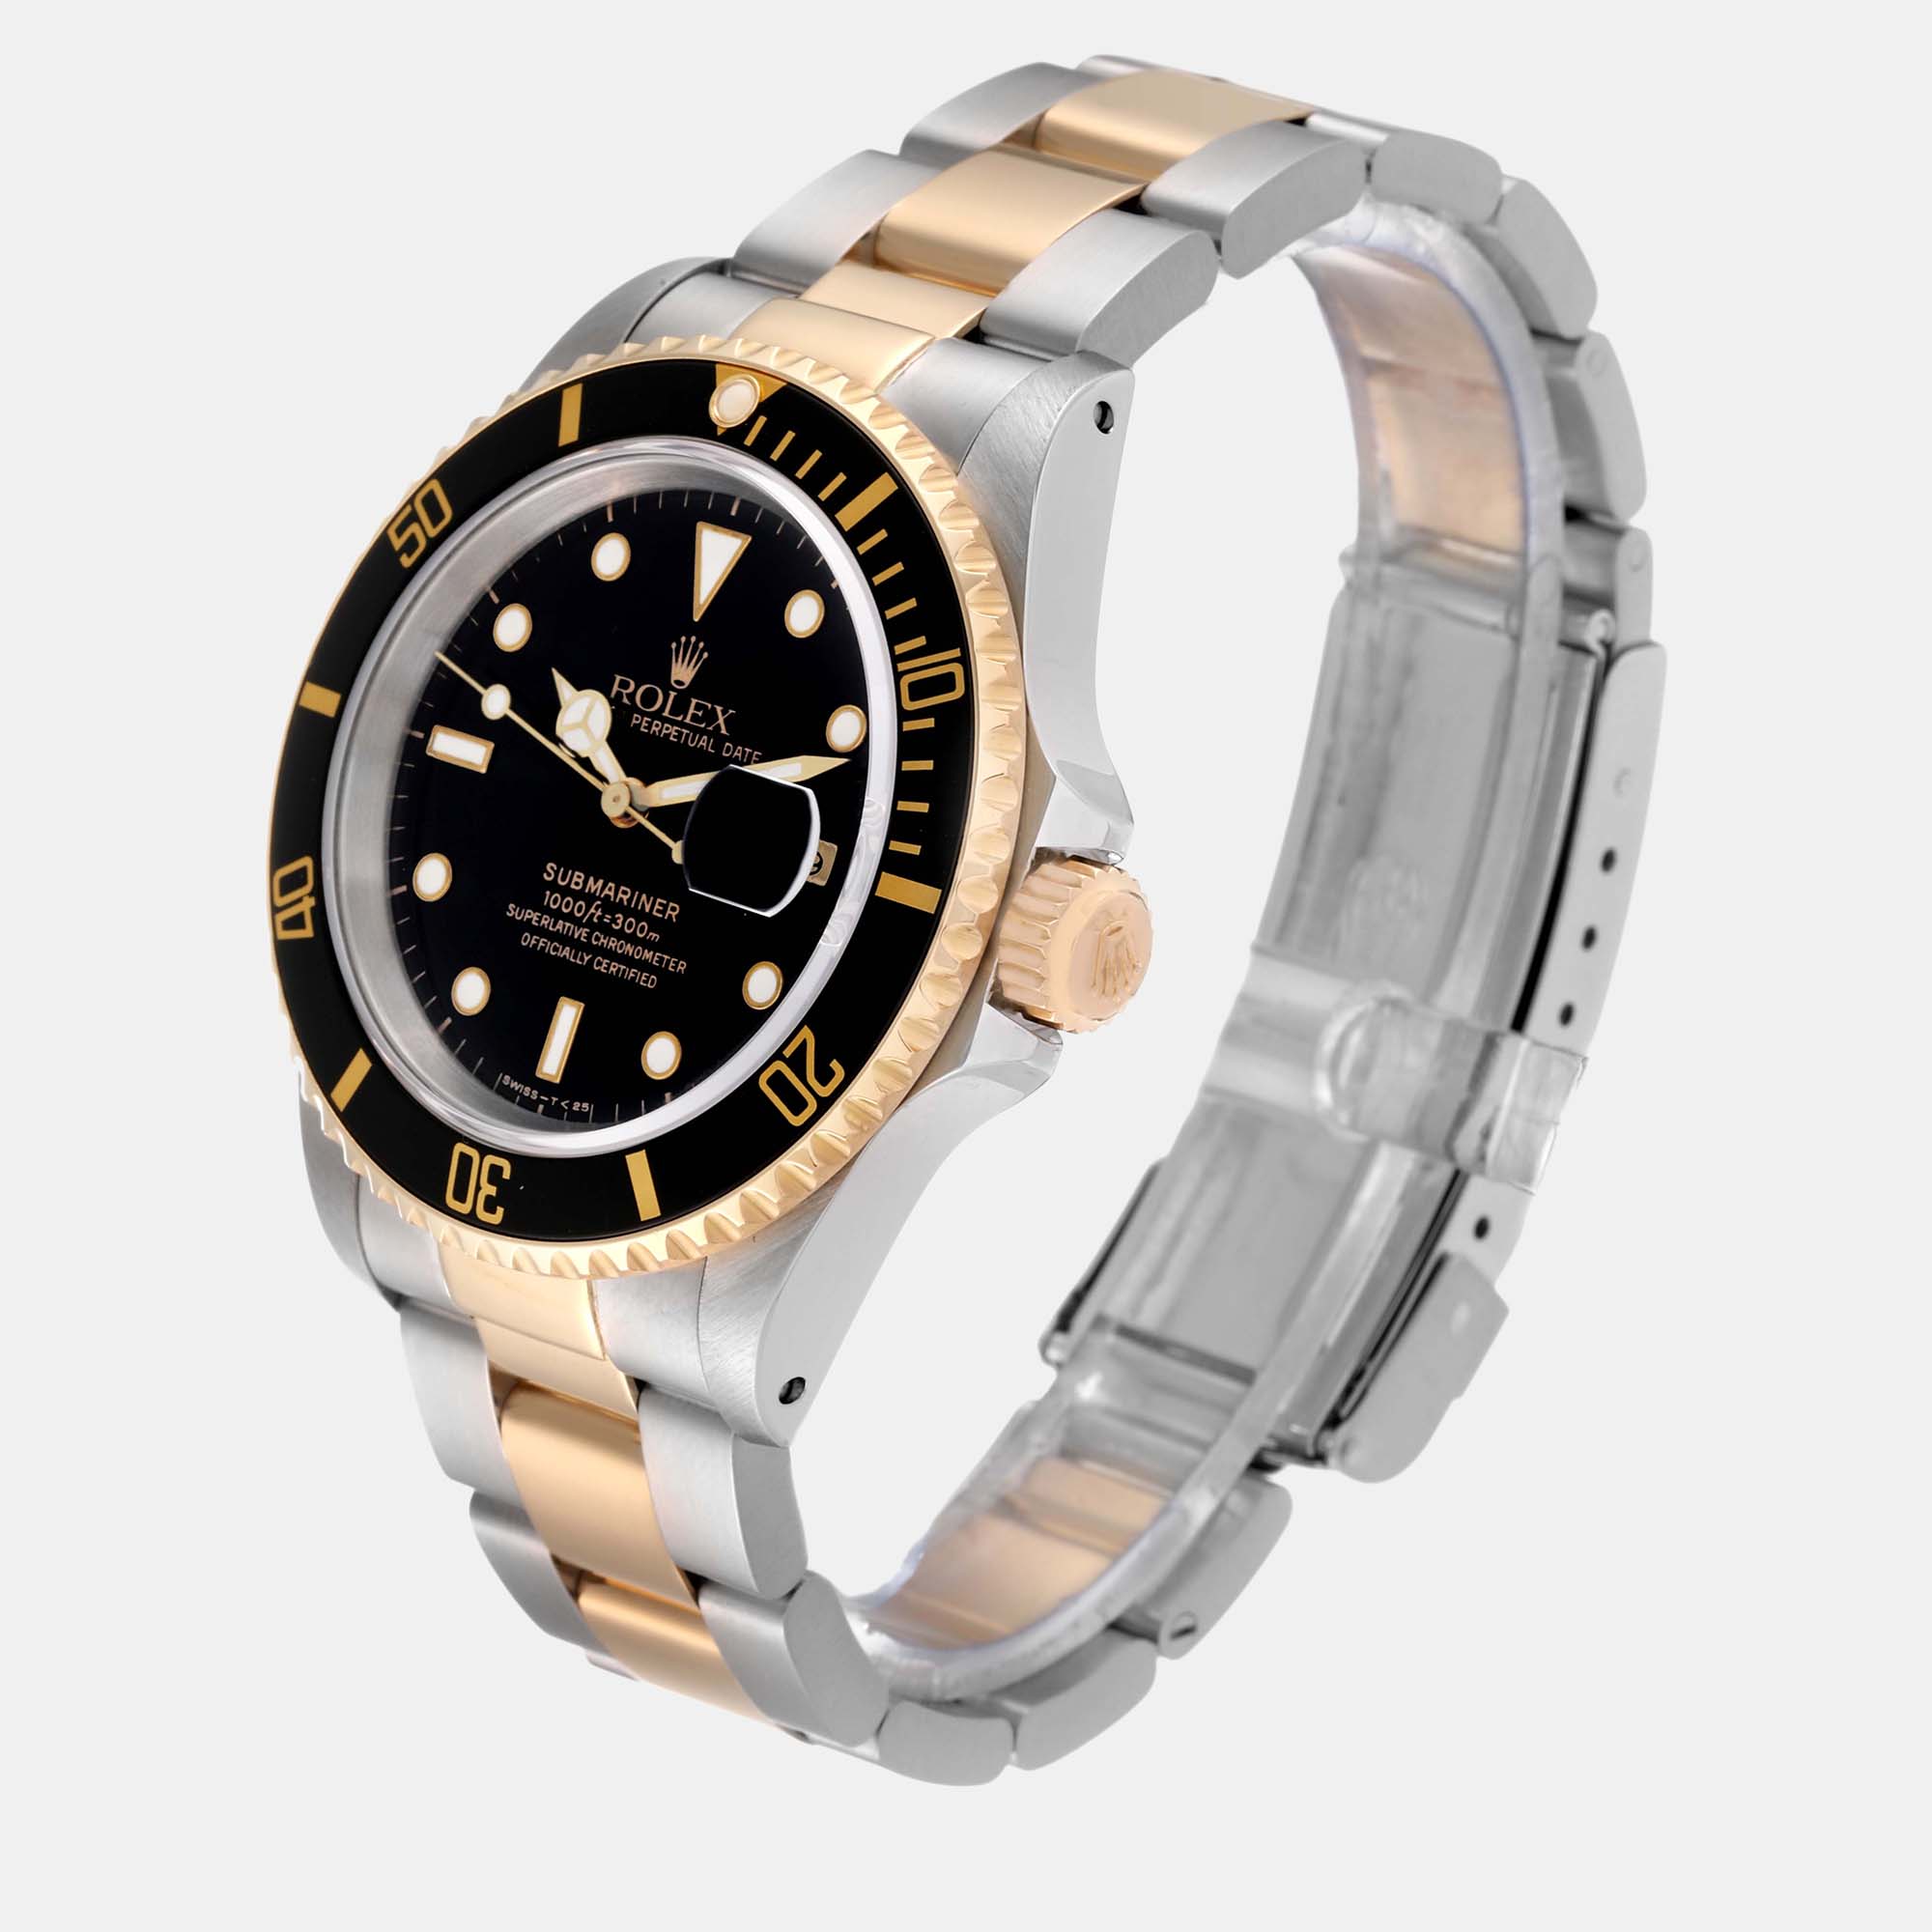 Rolex Submariner Steel Yellow Gold Black Dial Men's Watch 16613 40 Mm